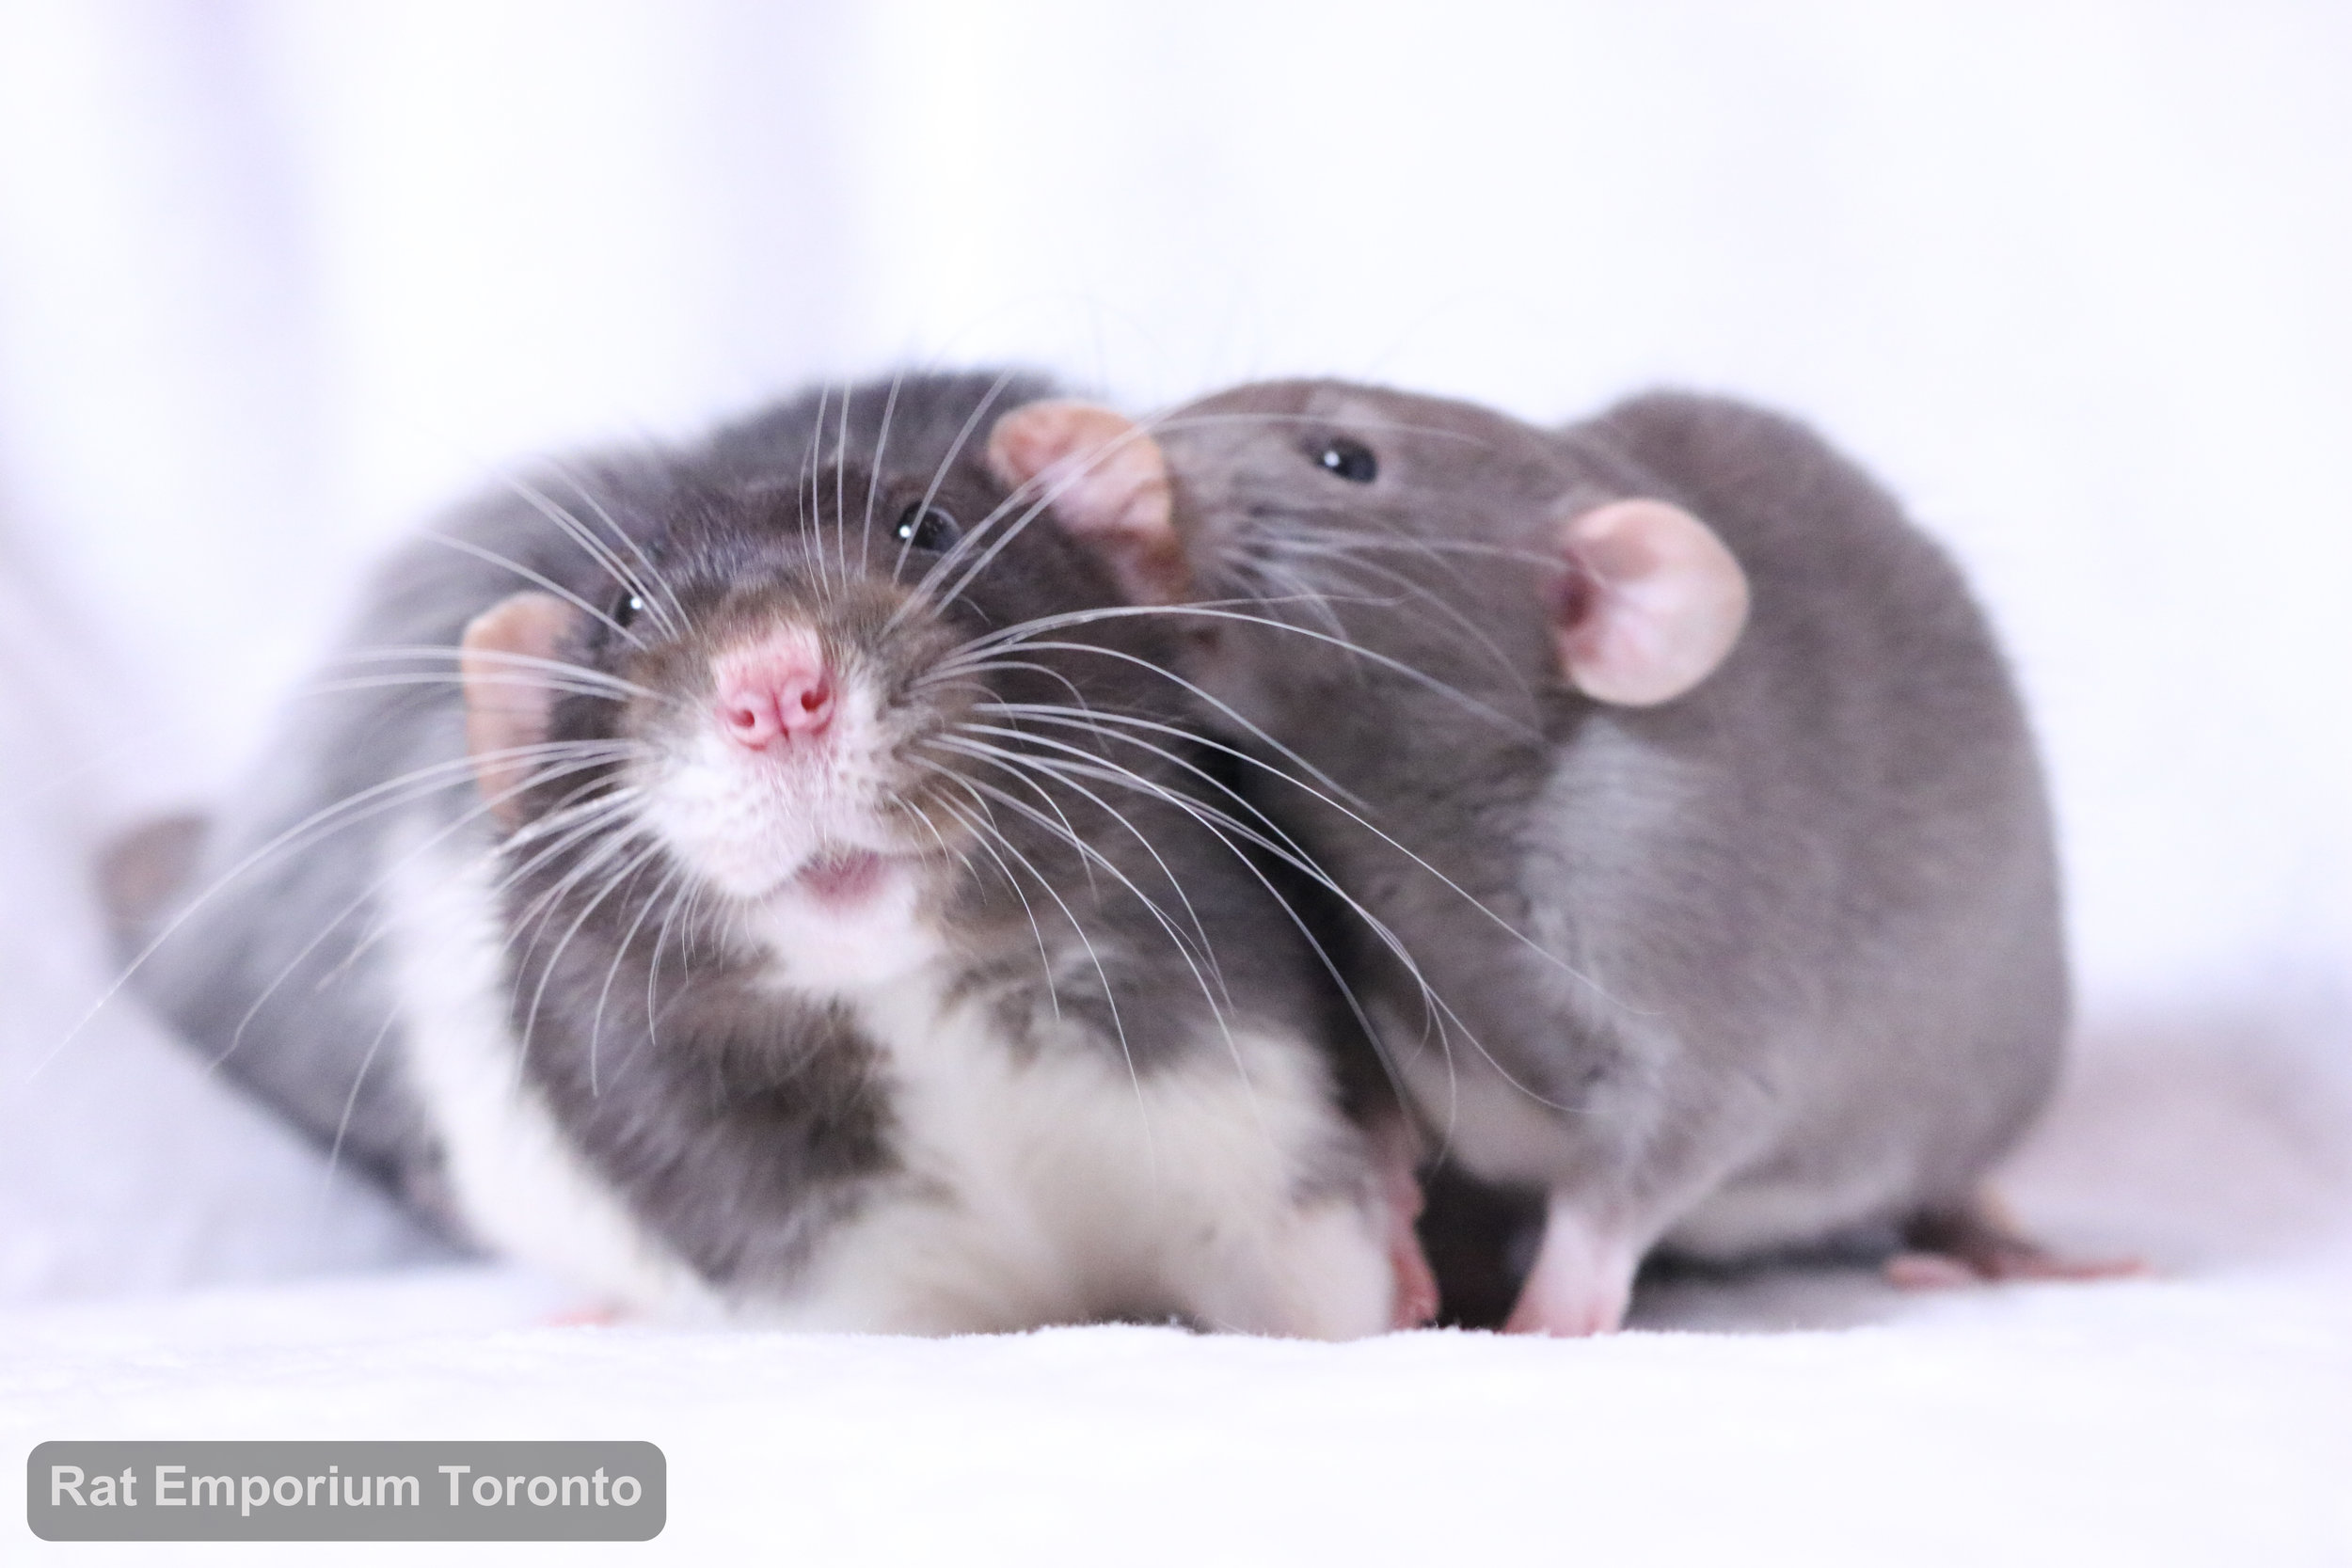 black and white variegated dumbo rat, mink dumbo rat, black silvermane dumbo rat - born and raised at Rat Emporium Toronto - pet rat breeder - adopt pet rats Toronto 